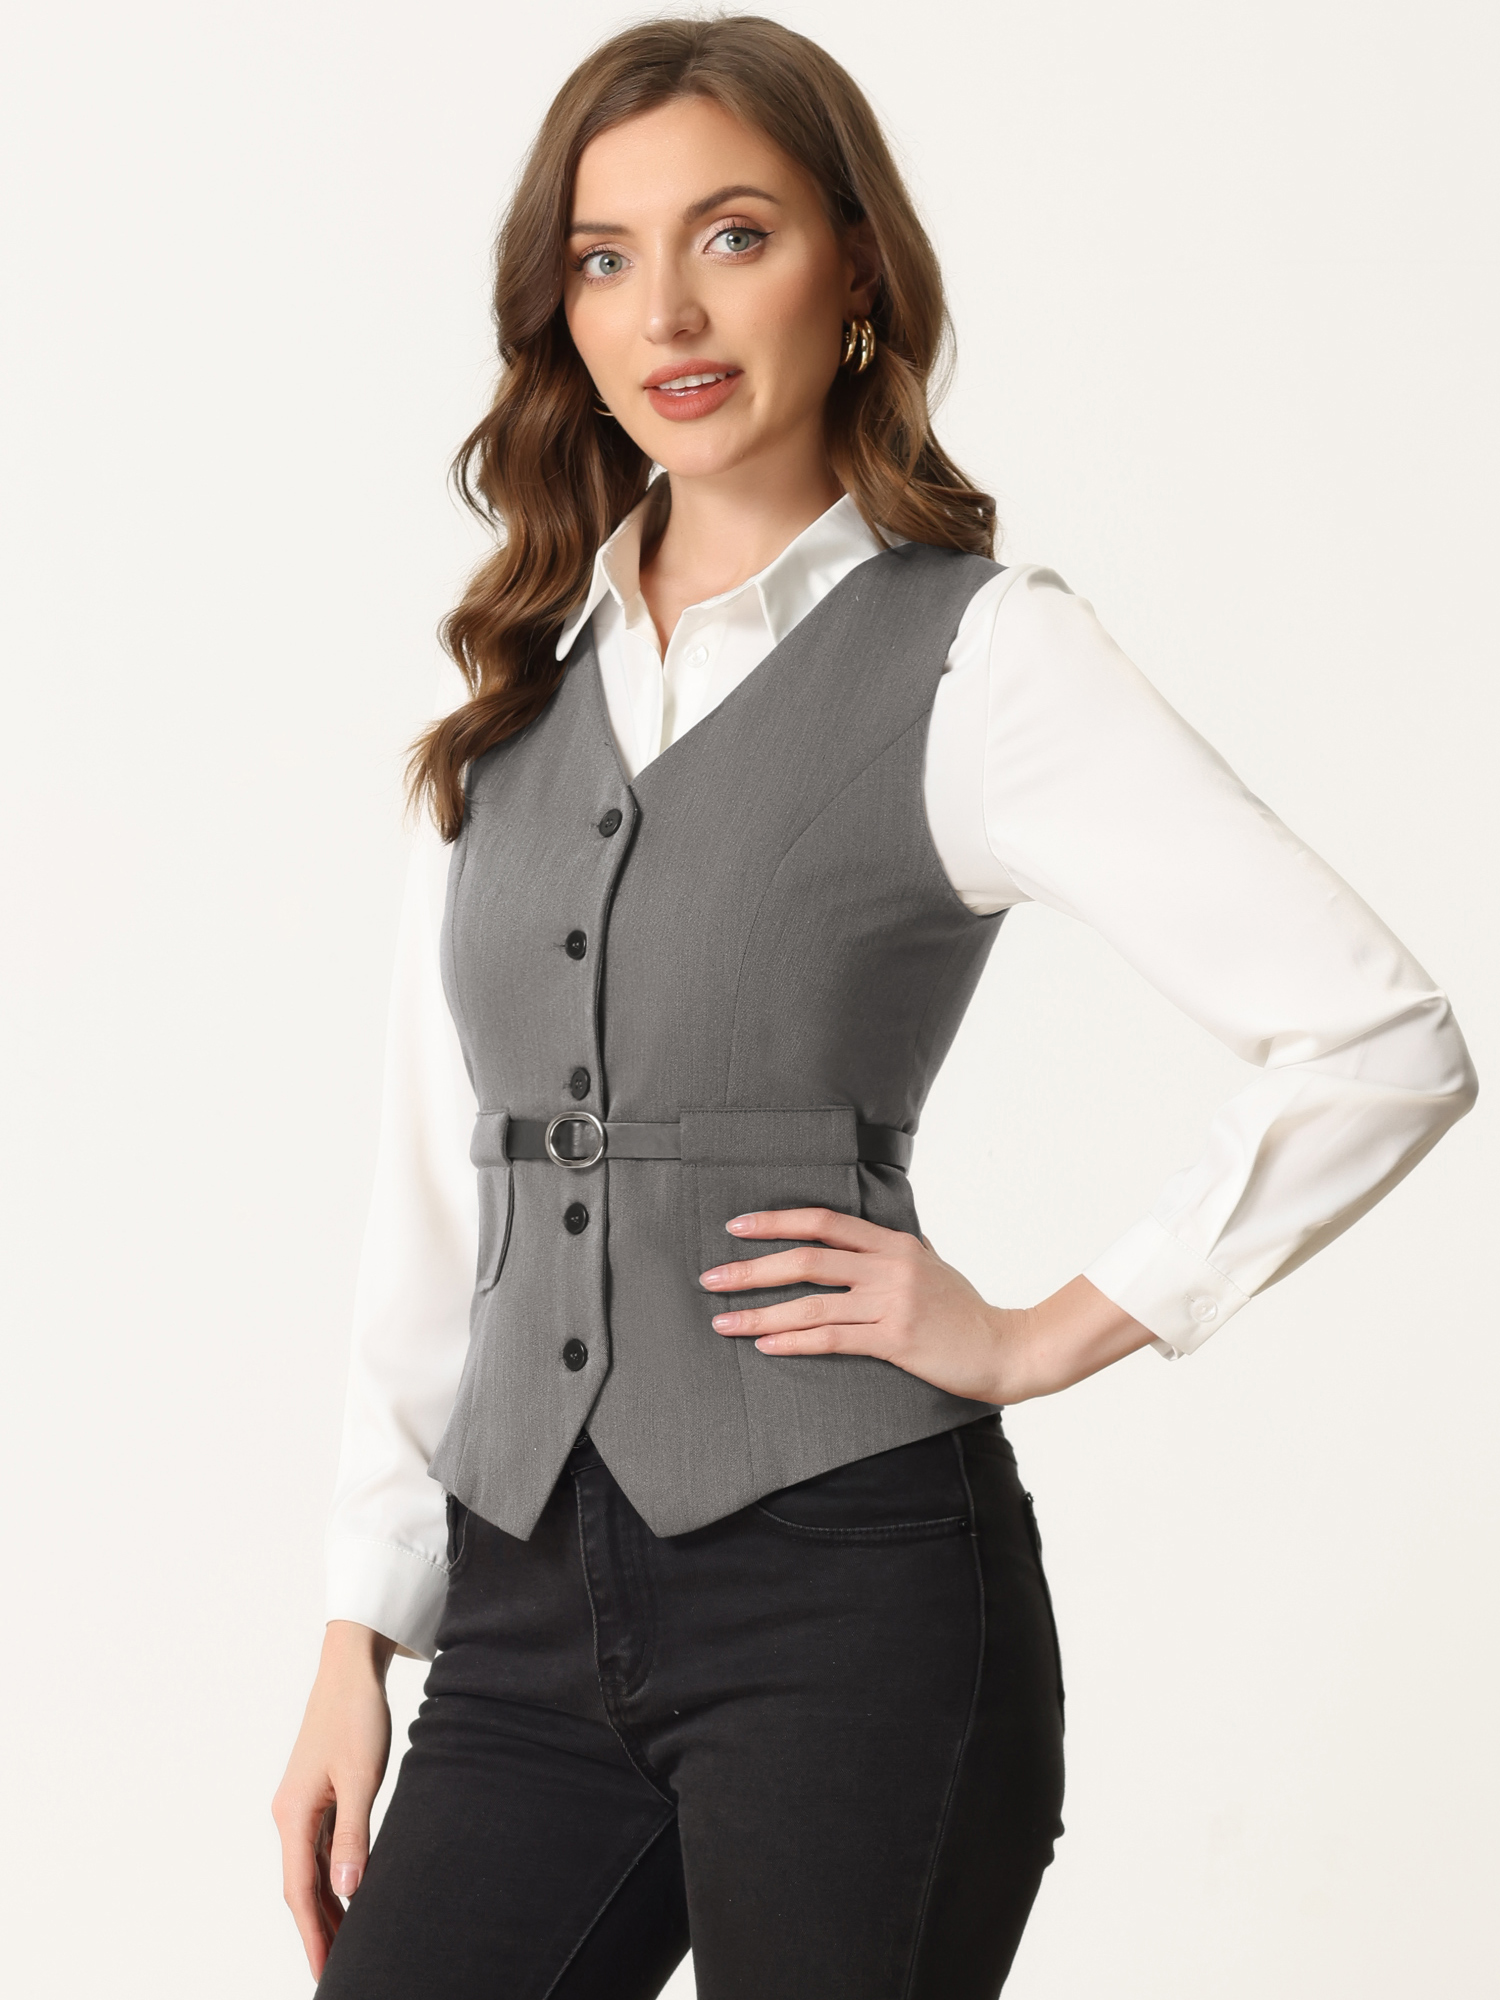 Unique Bargains Button Front Closure Vest for Women V Neck Belted Pockets